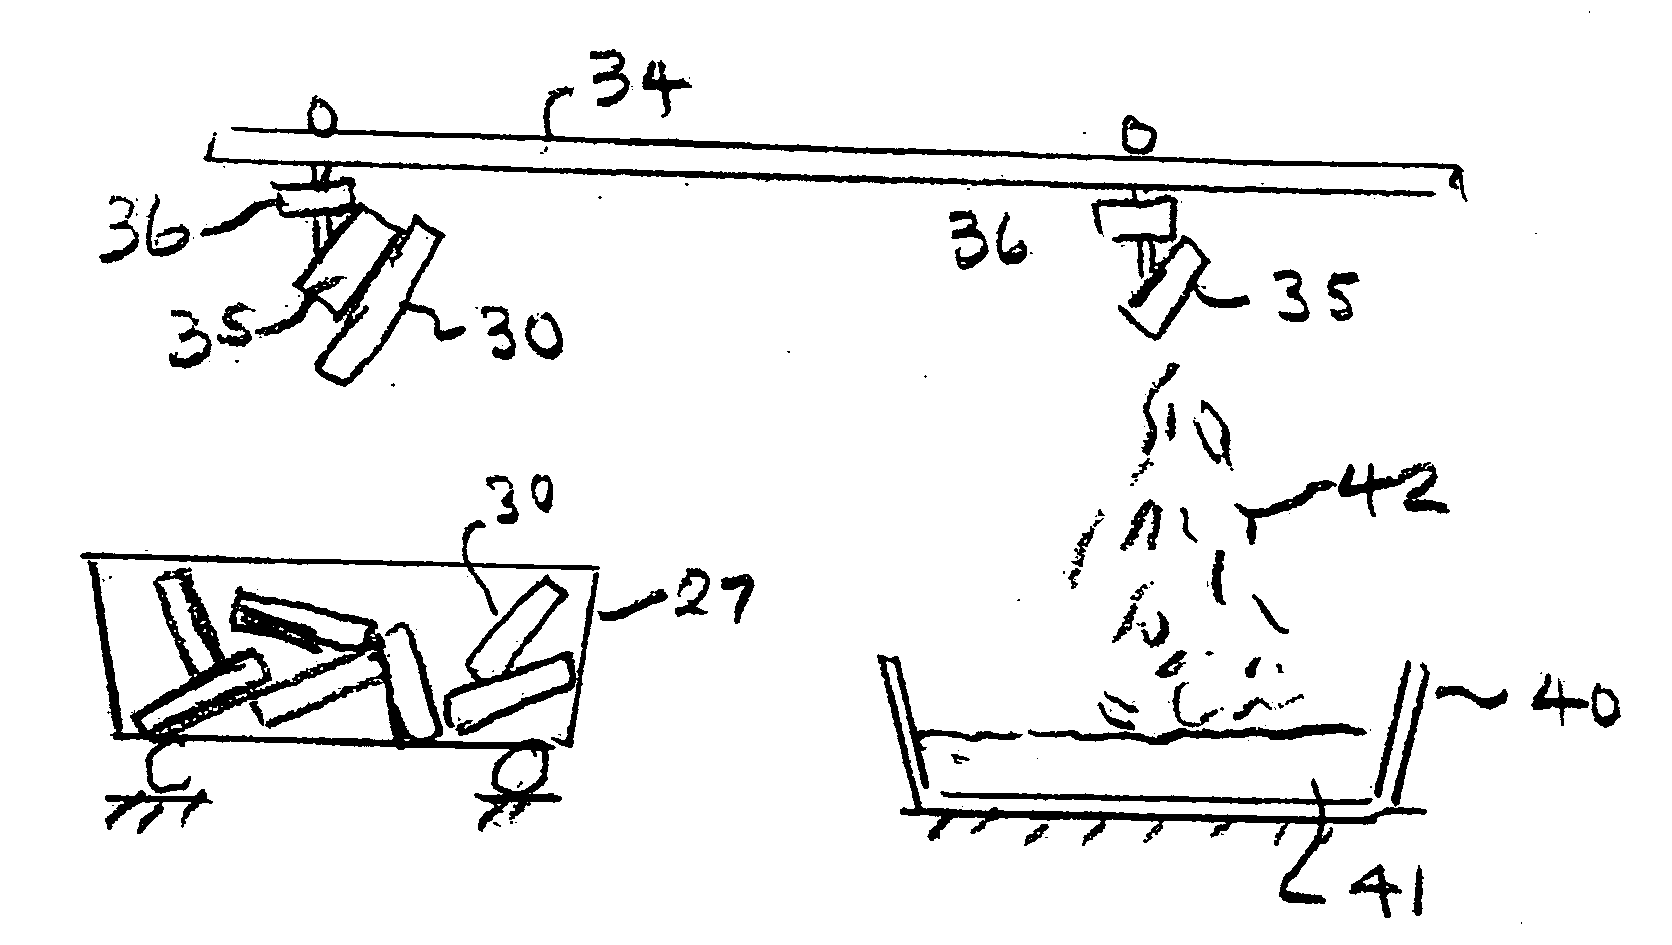 Method for transporting bent, irregularly shaped pieces of scrap sheet metal